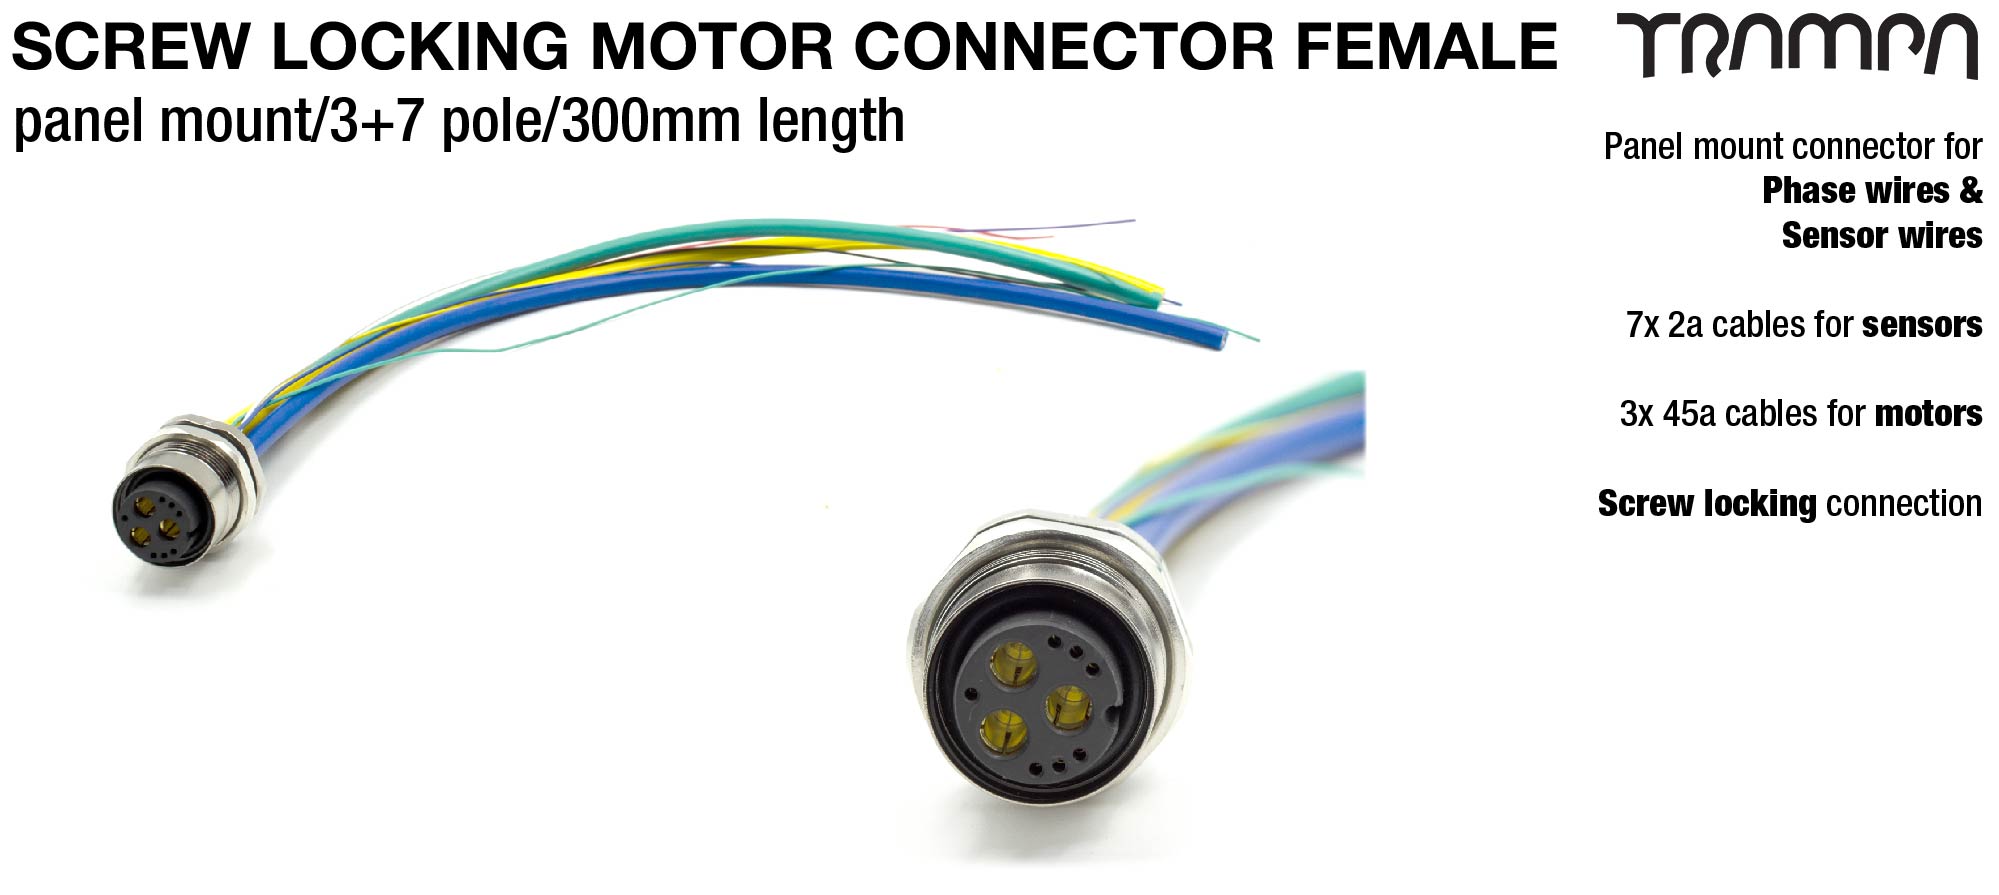 Screw locking motor cable female - panel mount